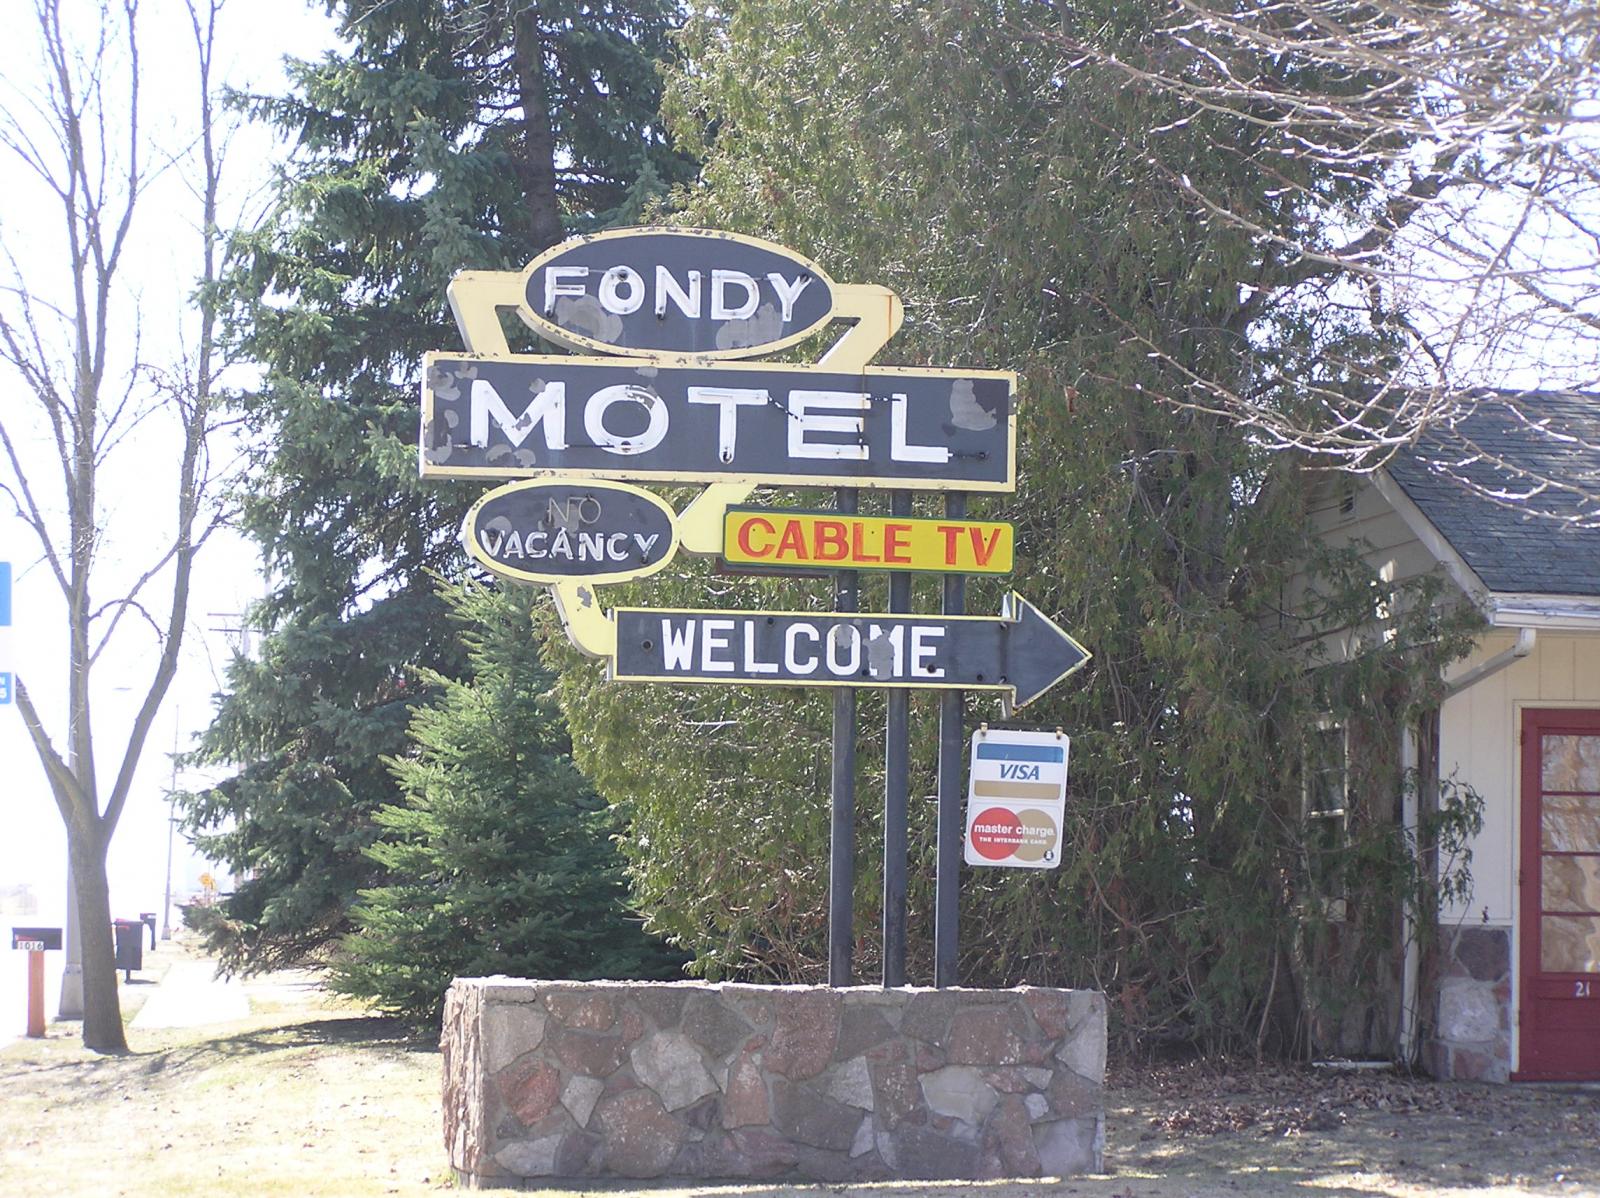 Fondy Motel.JPG